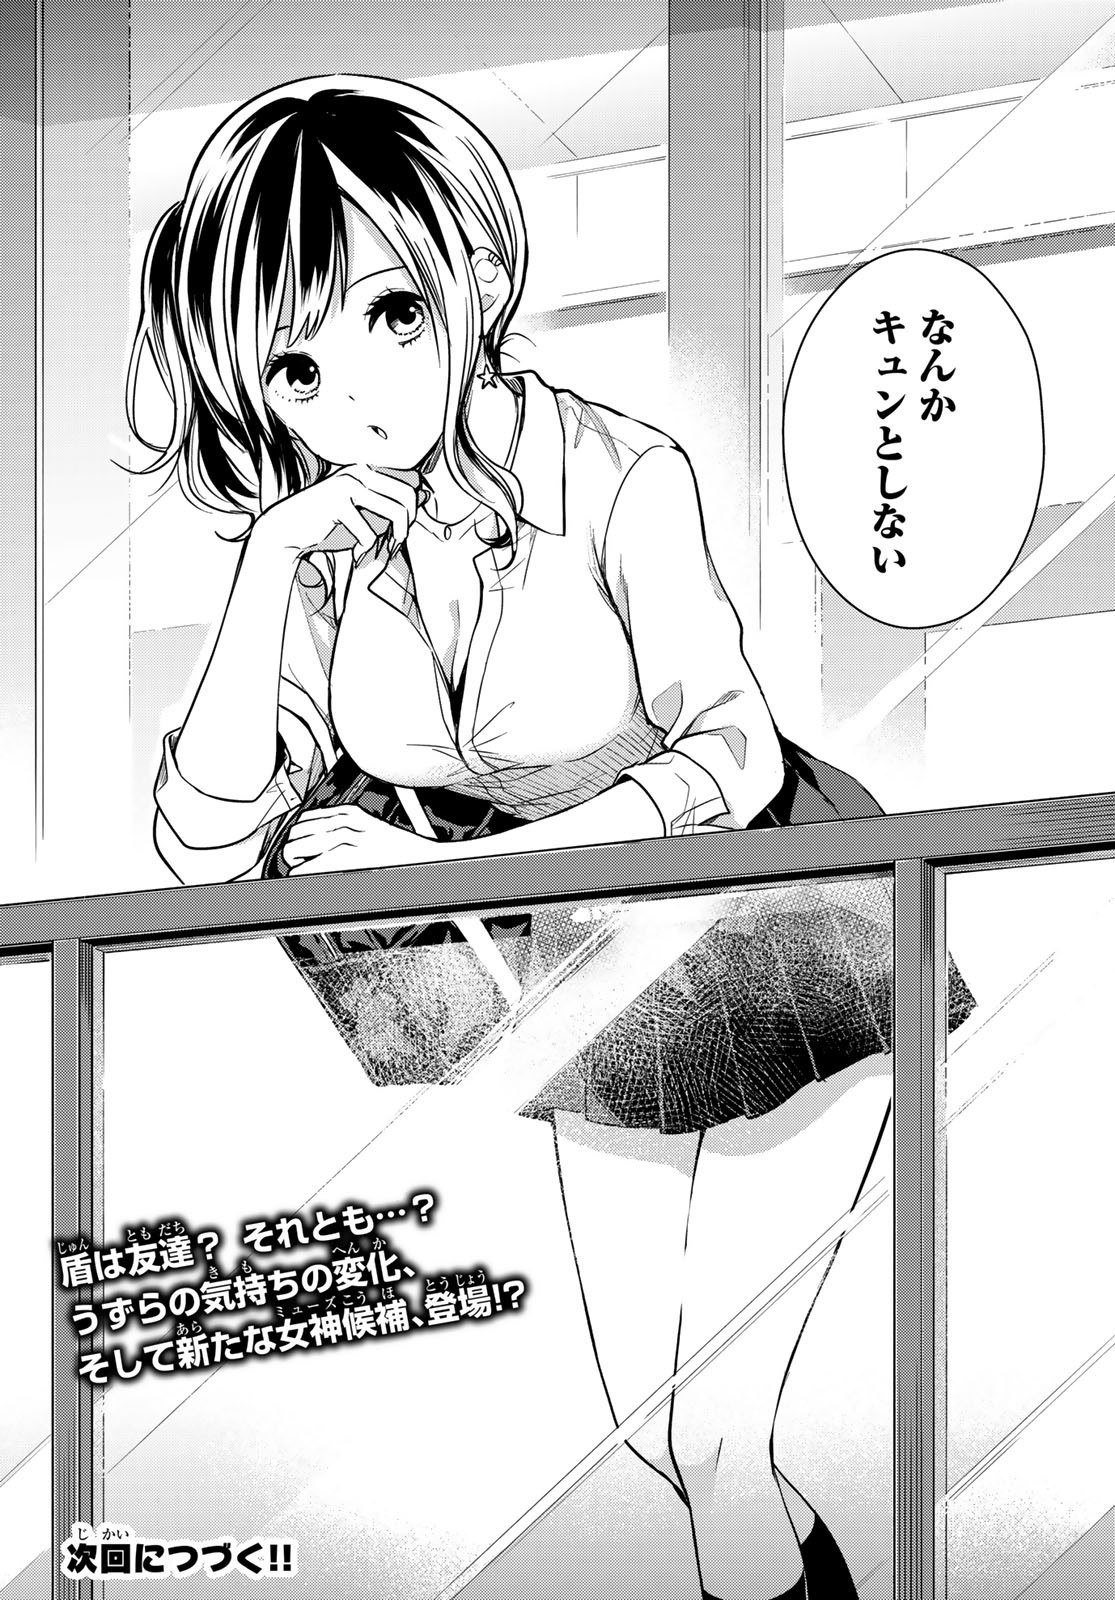 Kimi ga Megami Nara Ii no ni (I Wish You Were My Muse) - Chapter 004 - Page 21